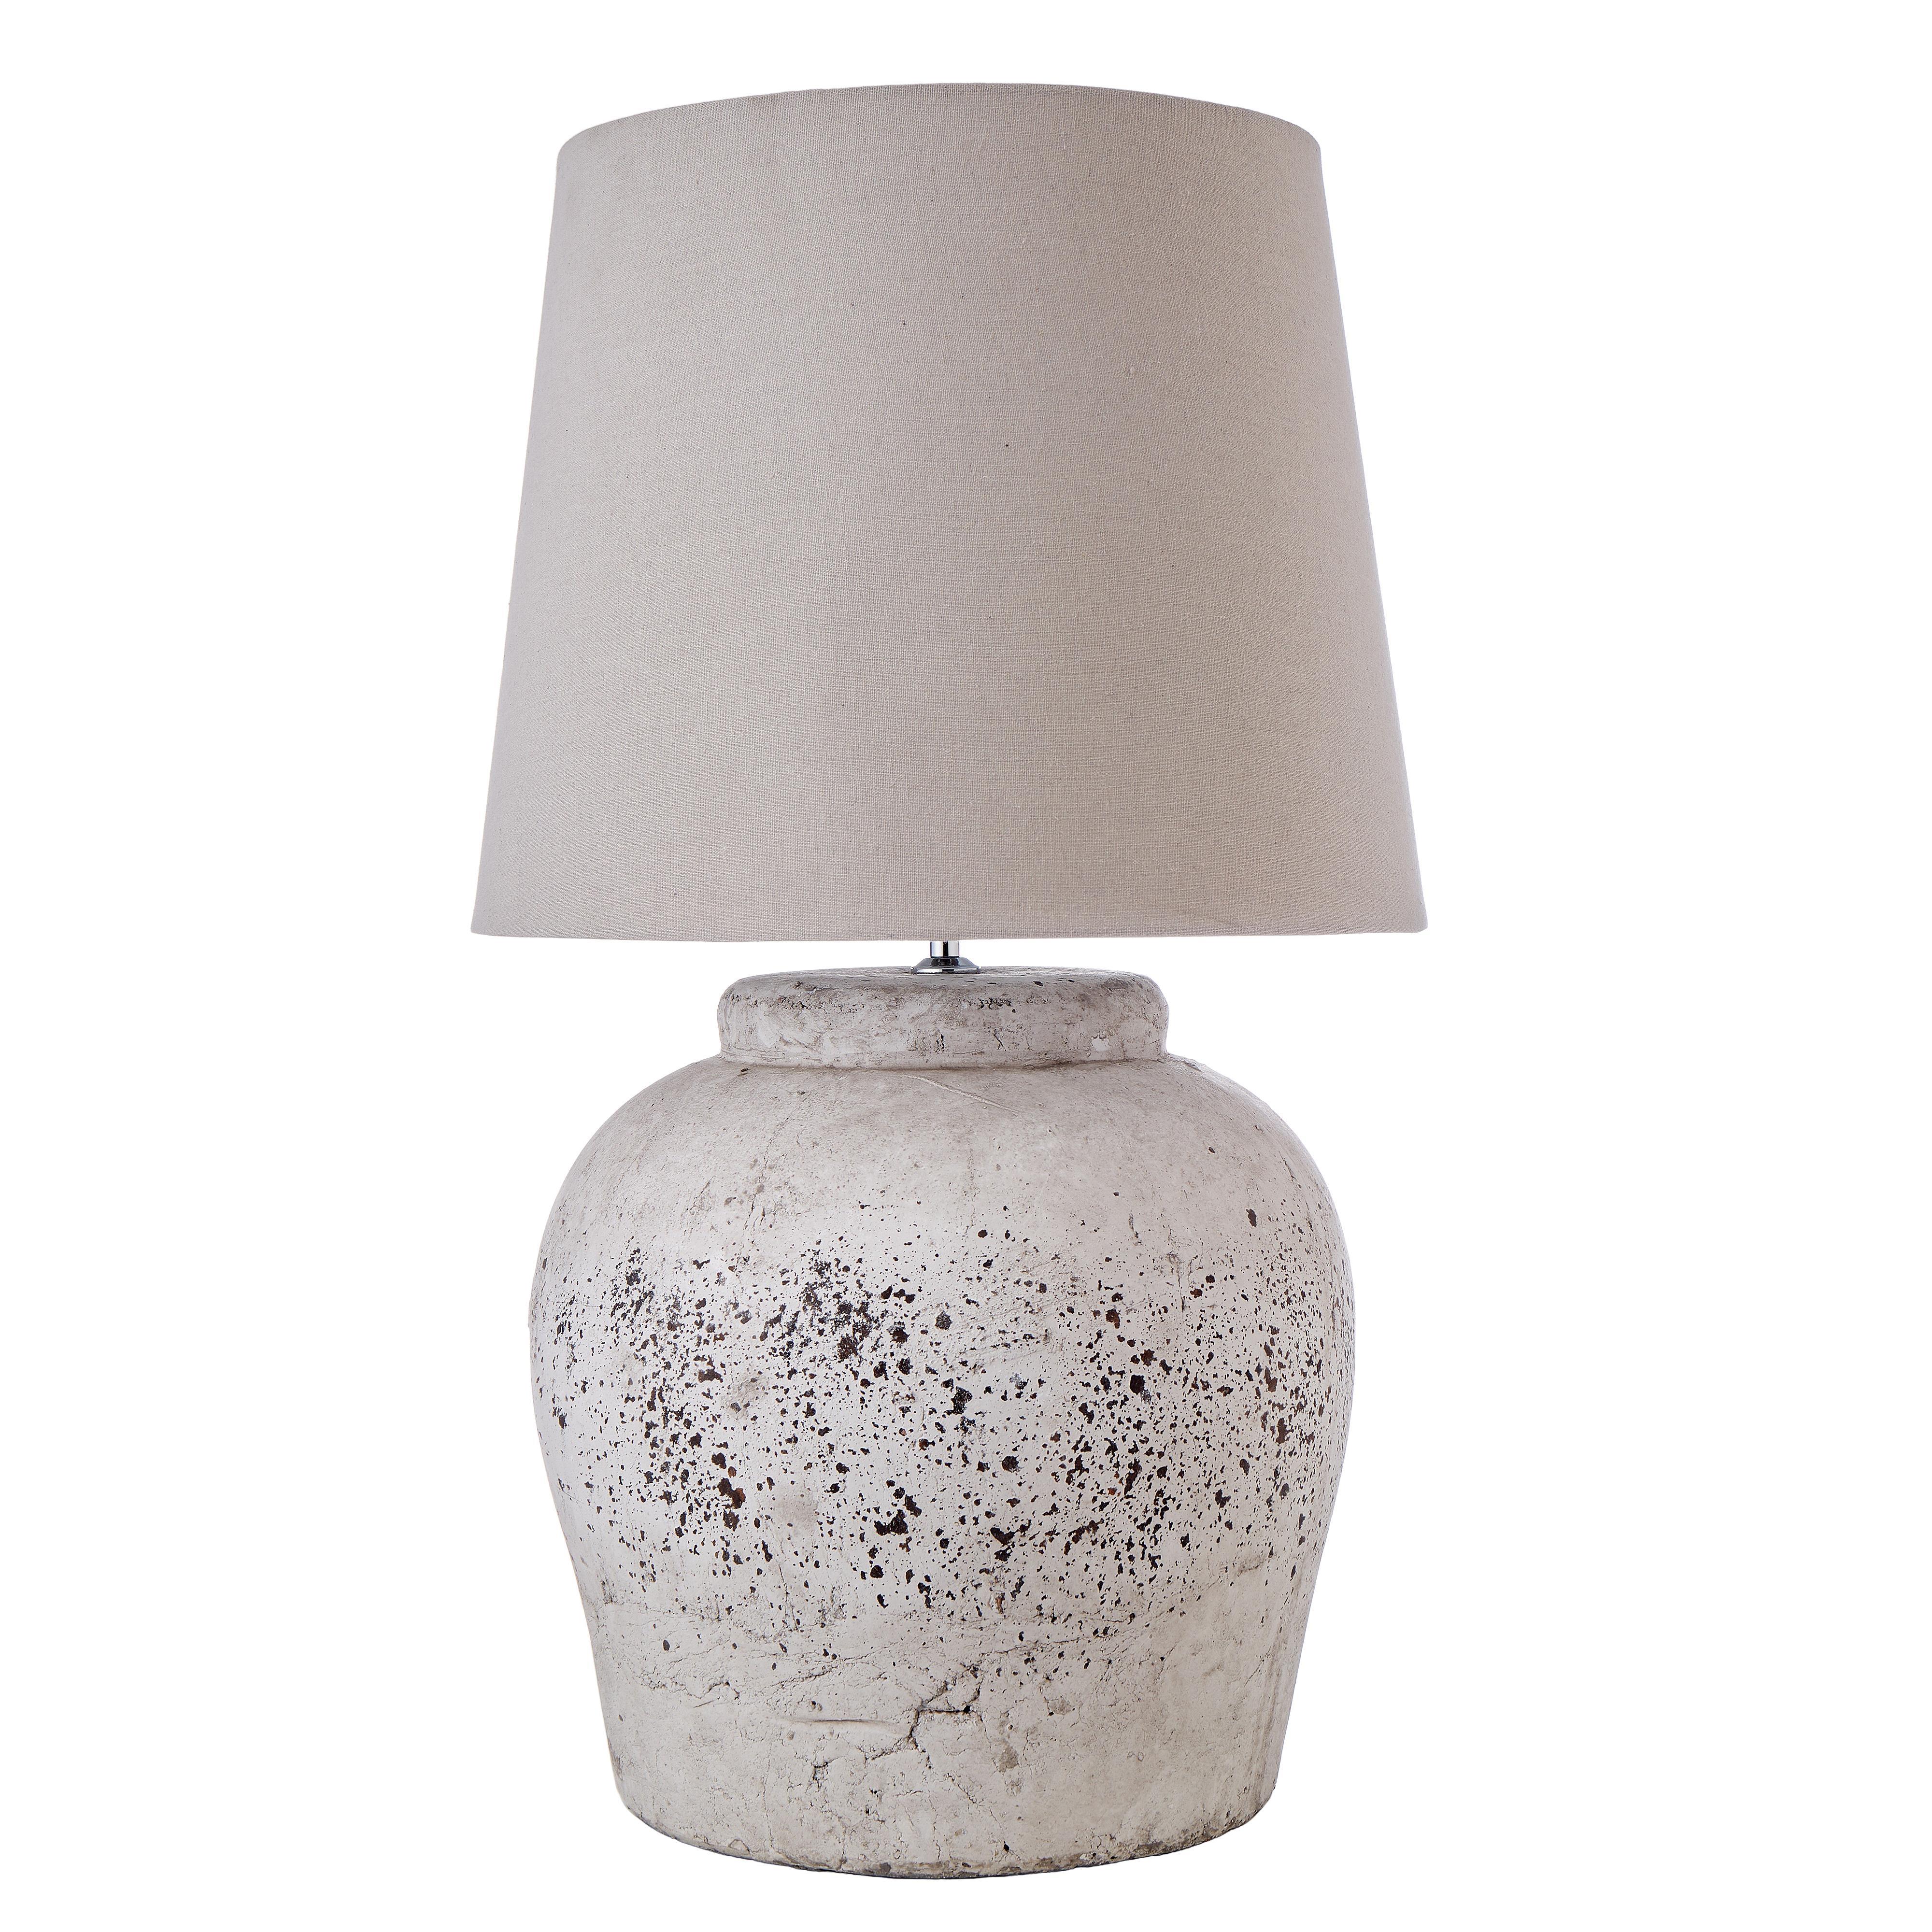 Amalfi Rustic Ceramic Table Lamp 77 Cm Home Decor Bedside Living Study Room Desk Night Light Grey